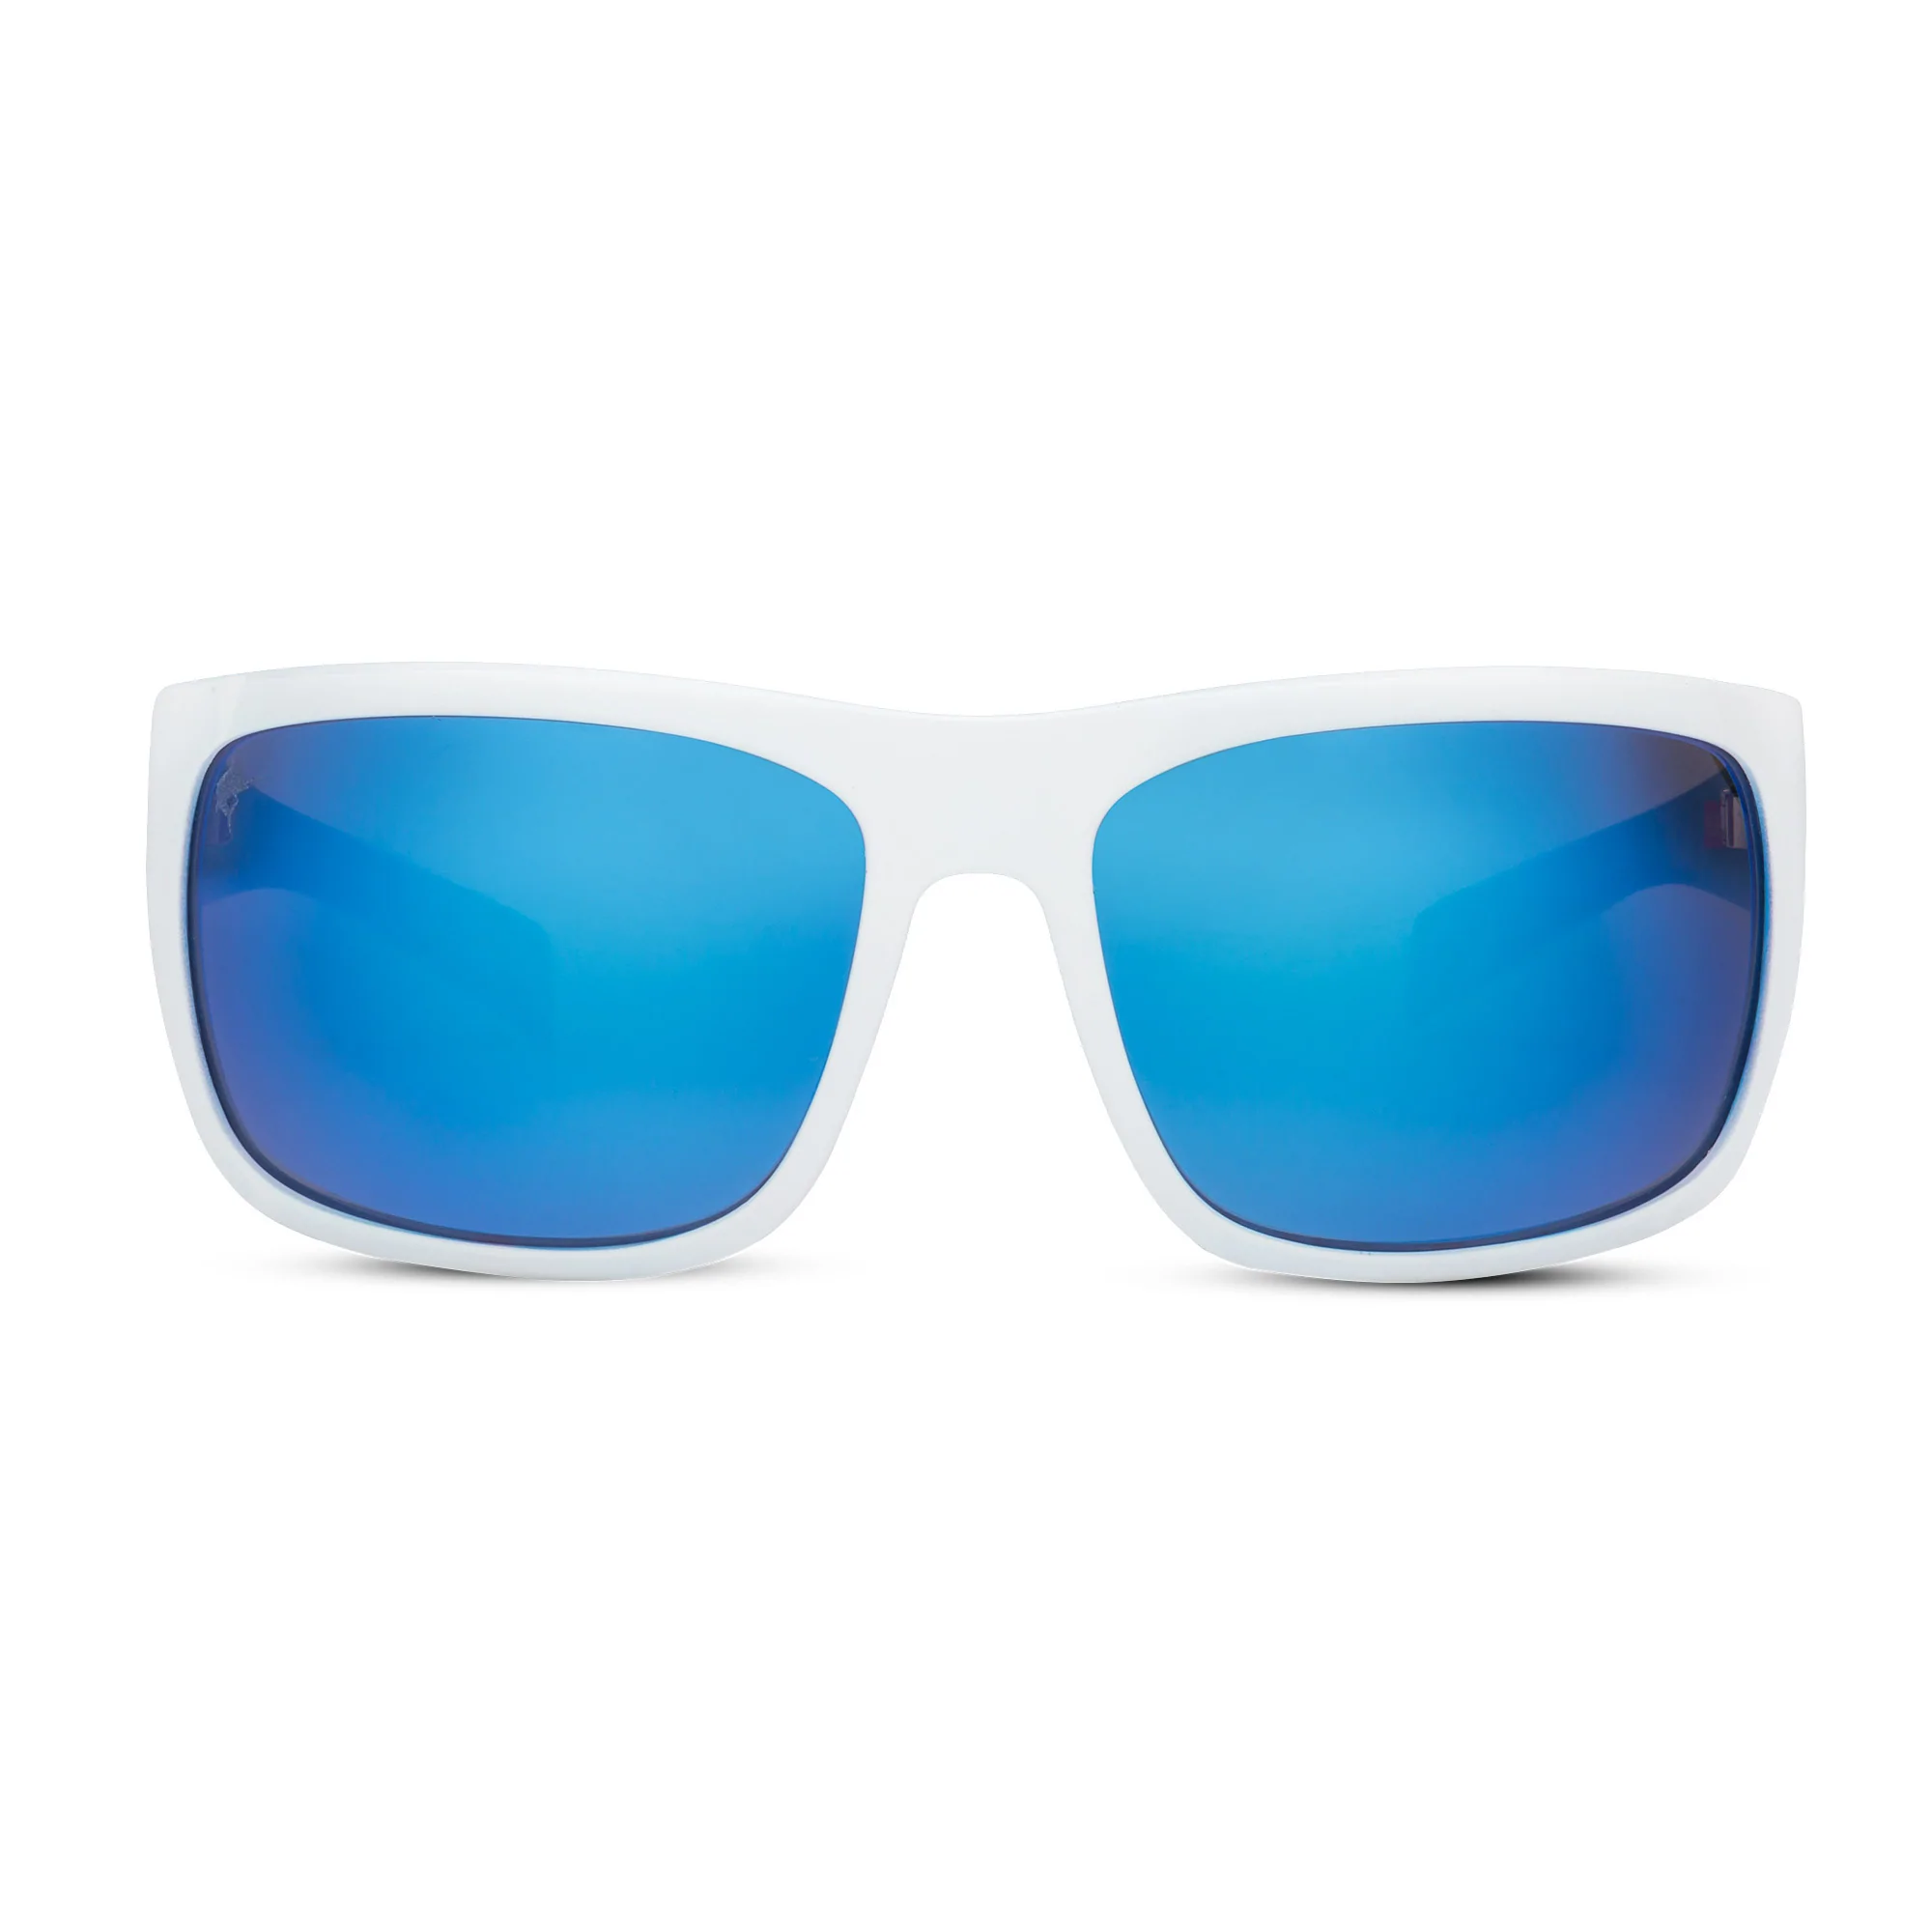 Слънчеви очила PELAGIC LIGHTHOUSE - POLARIZED MINERAL GLASS: White Blue/Blue Mirror